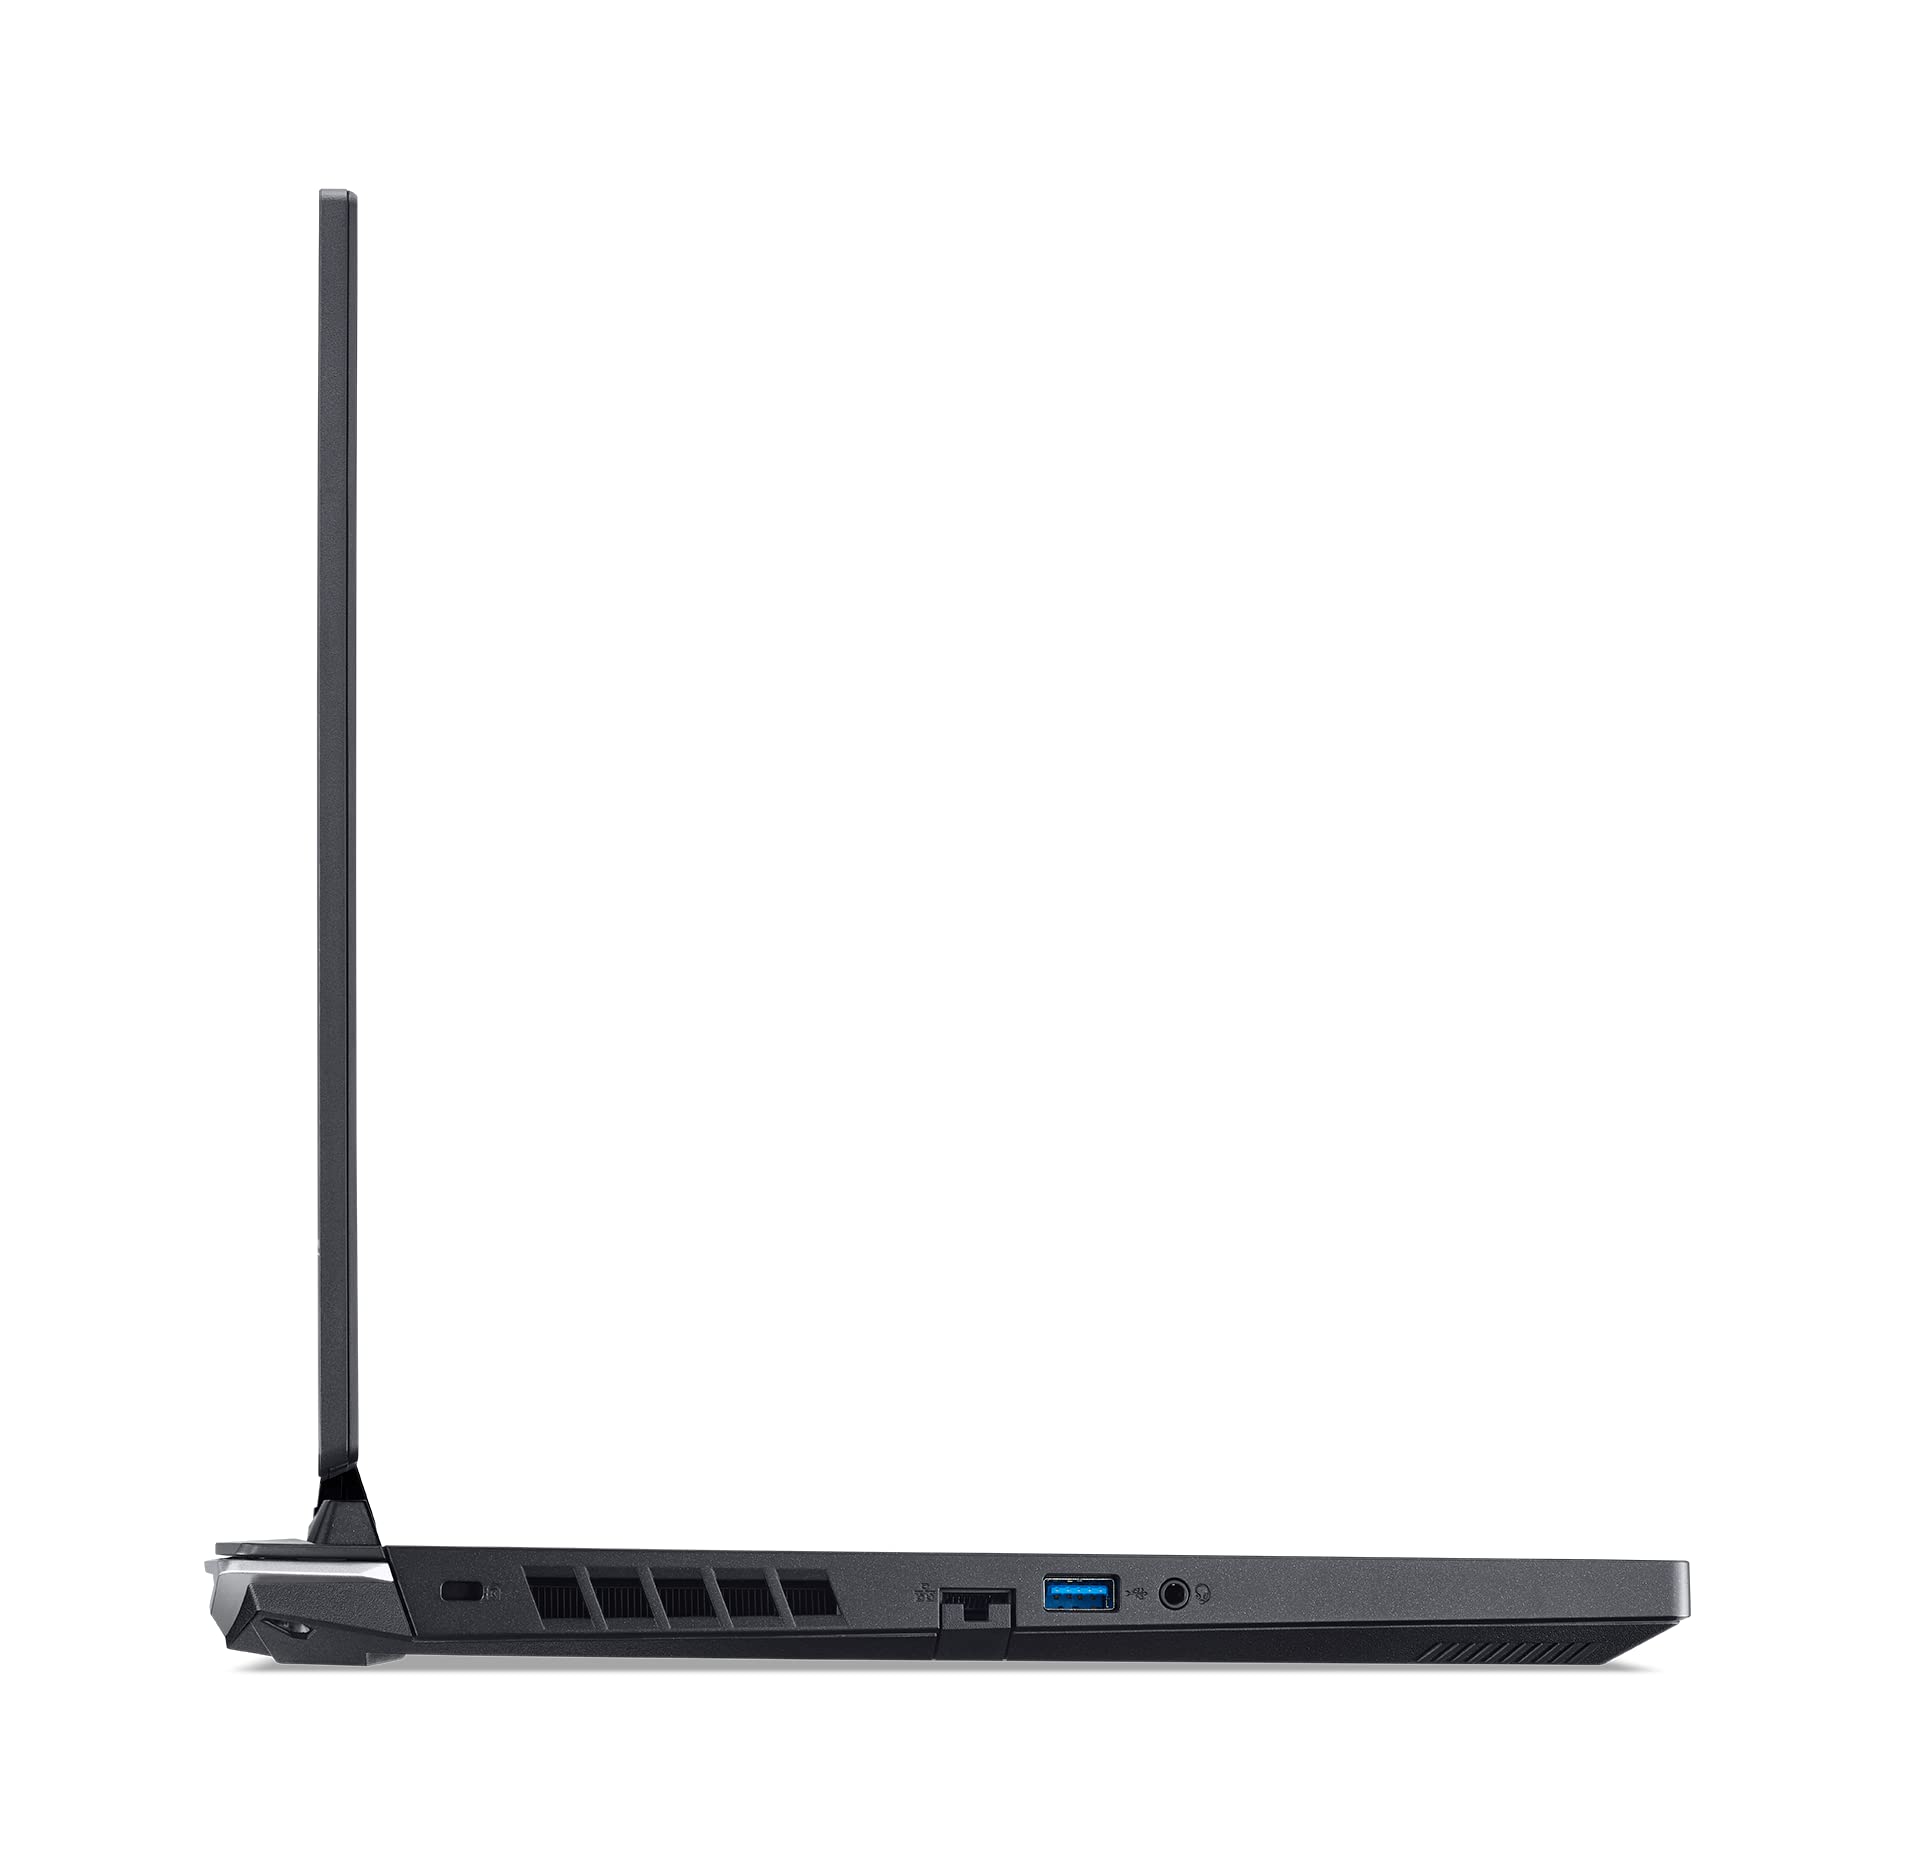 Acer Nitro 5 AN515-58-54XN Gaming Laptop Intel i5-12500H 16GB RAM 512GB SSD RTX3050 4GB Graphics 15.6" FHD 144Hz Win11Home, Black English Backlit RGB Keyboard